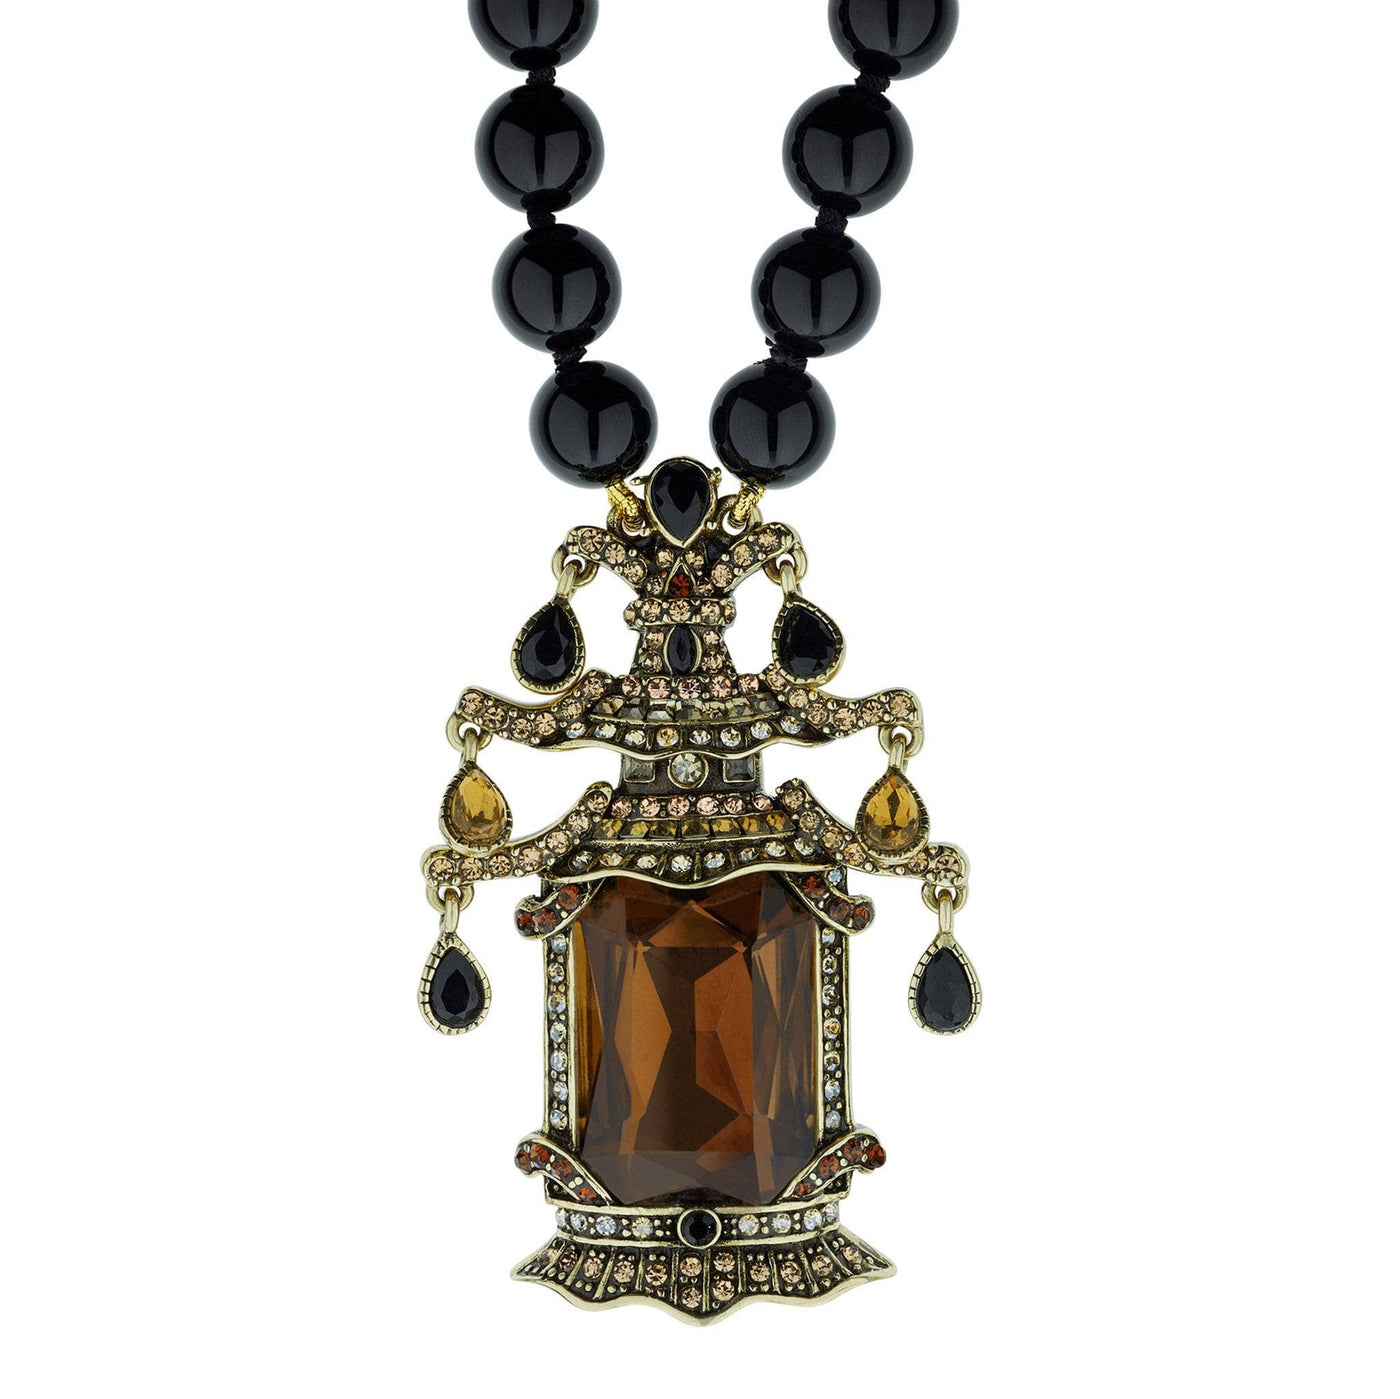 HEIDI DAUS®"Imperial Pagoda" Beaded Crystal Necklace